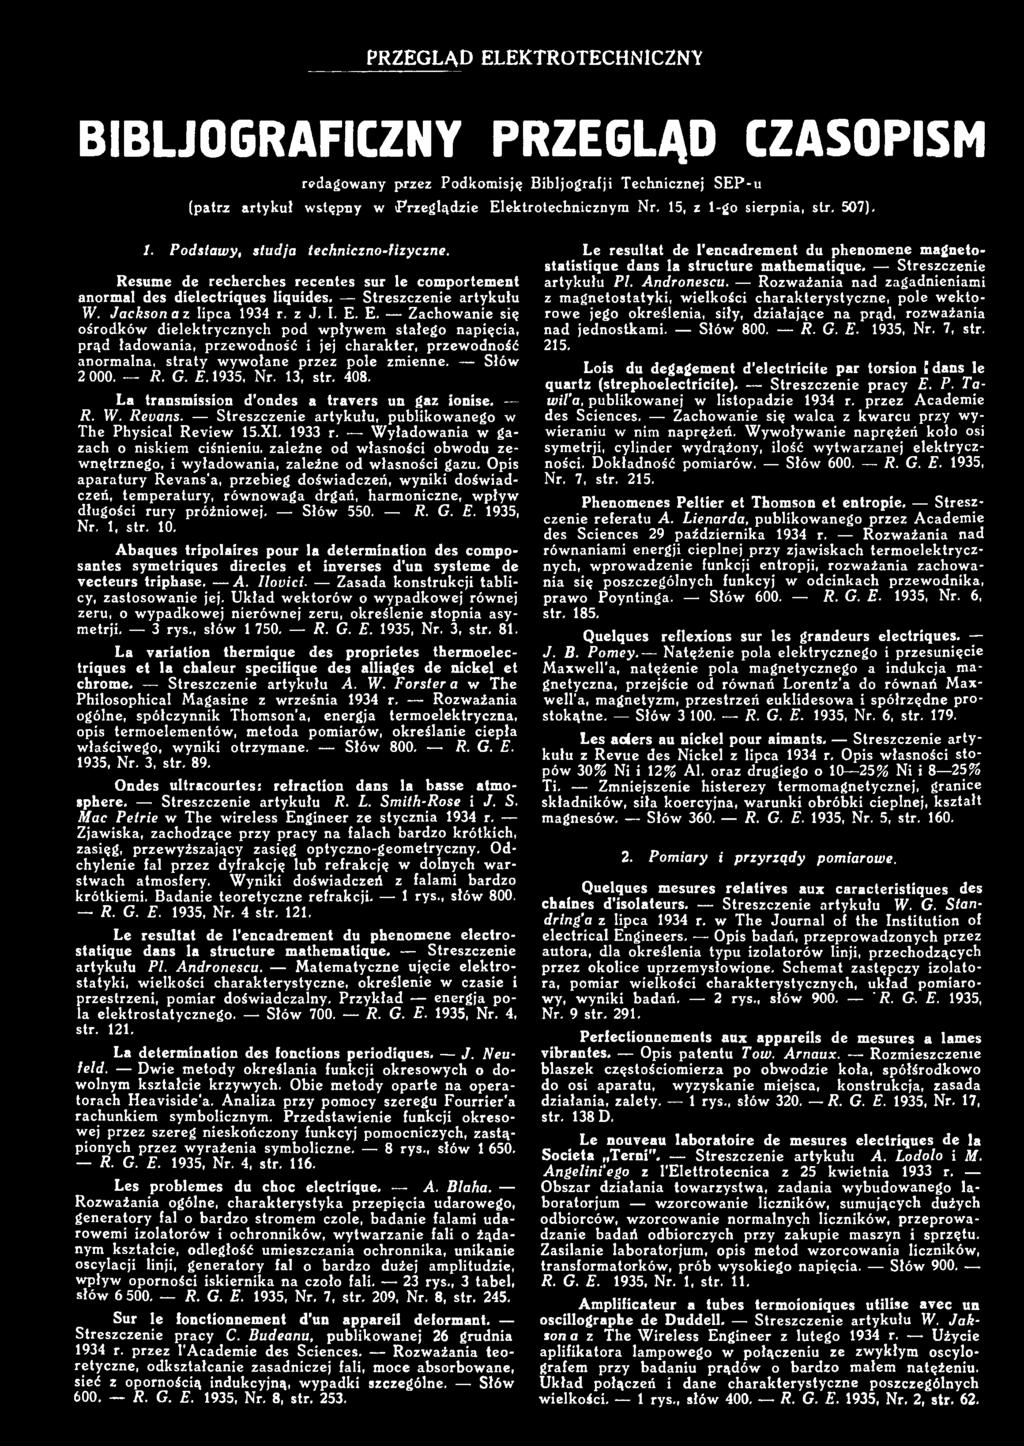 13, str. 408. La transmissin d'ndes a travers un gaz inise. R. IV. R e v a n s. Streszczenie artykułu, publikwaneg w The Physical Review 15.XI. 1933 r.